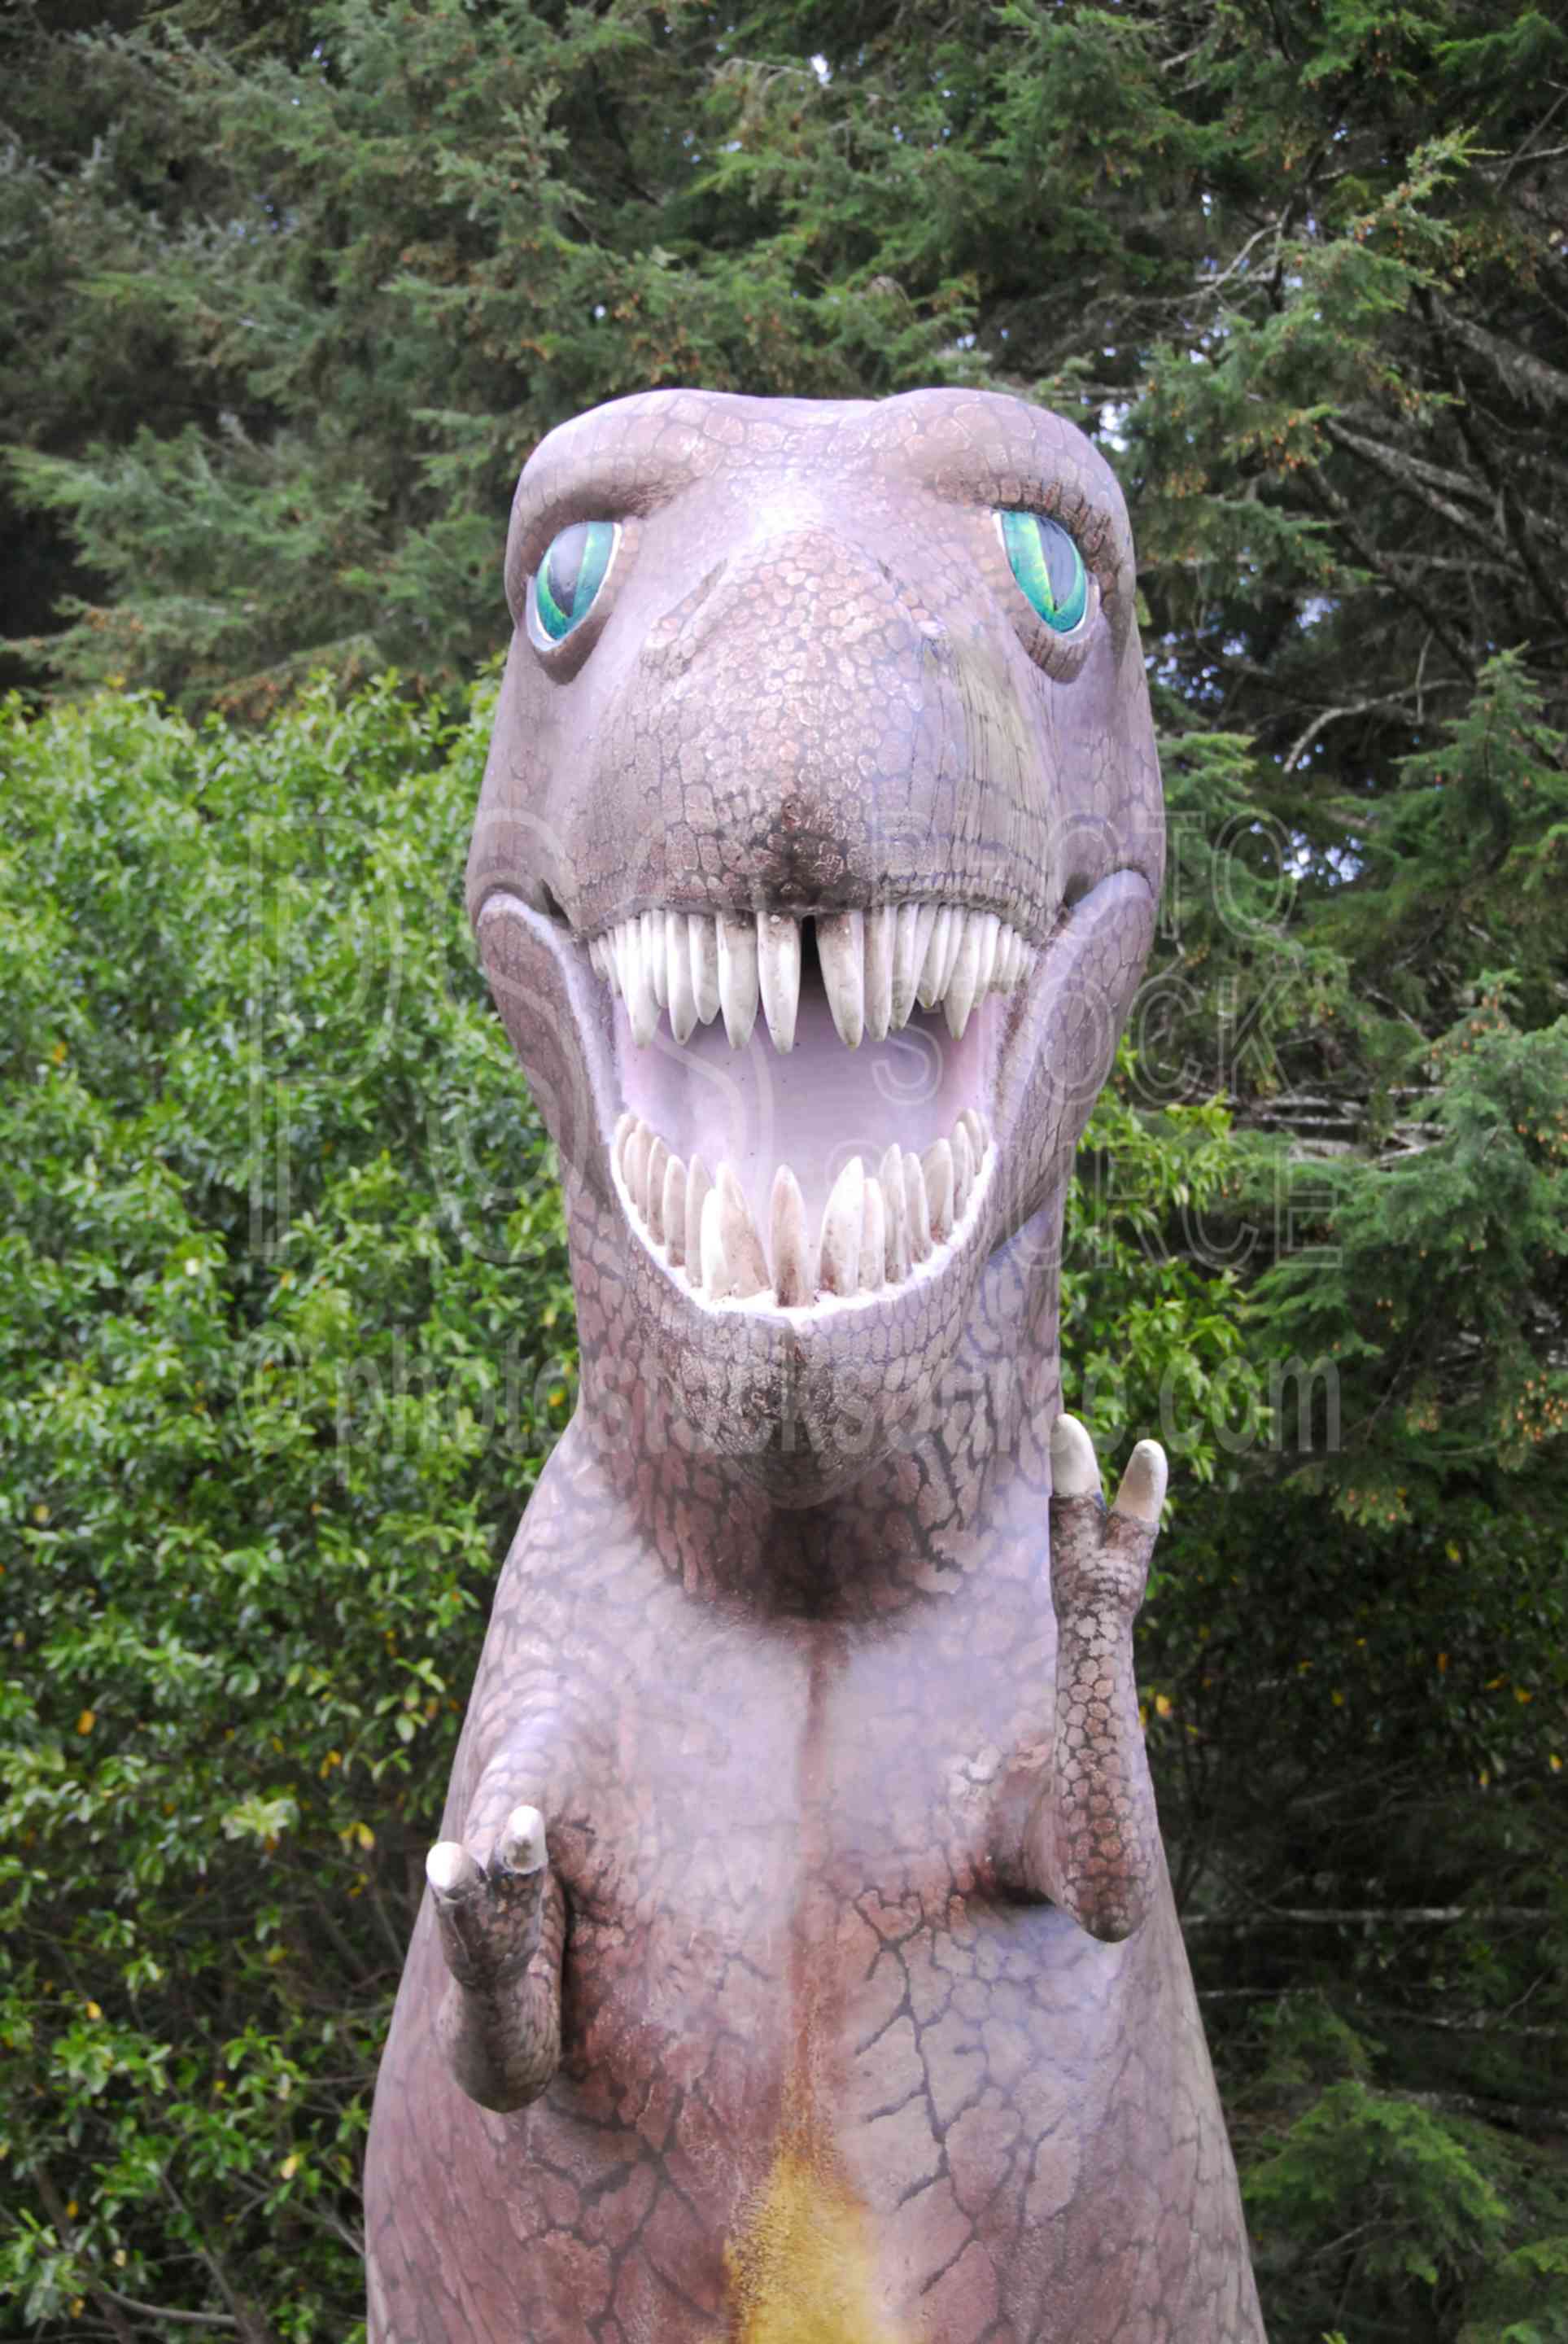 Prehistoric Gardens Dinosaur,reptile,statue,roadside,tourist trap,tourism,fantasy,dinosaur,tryranosaurus rex